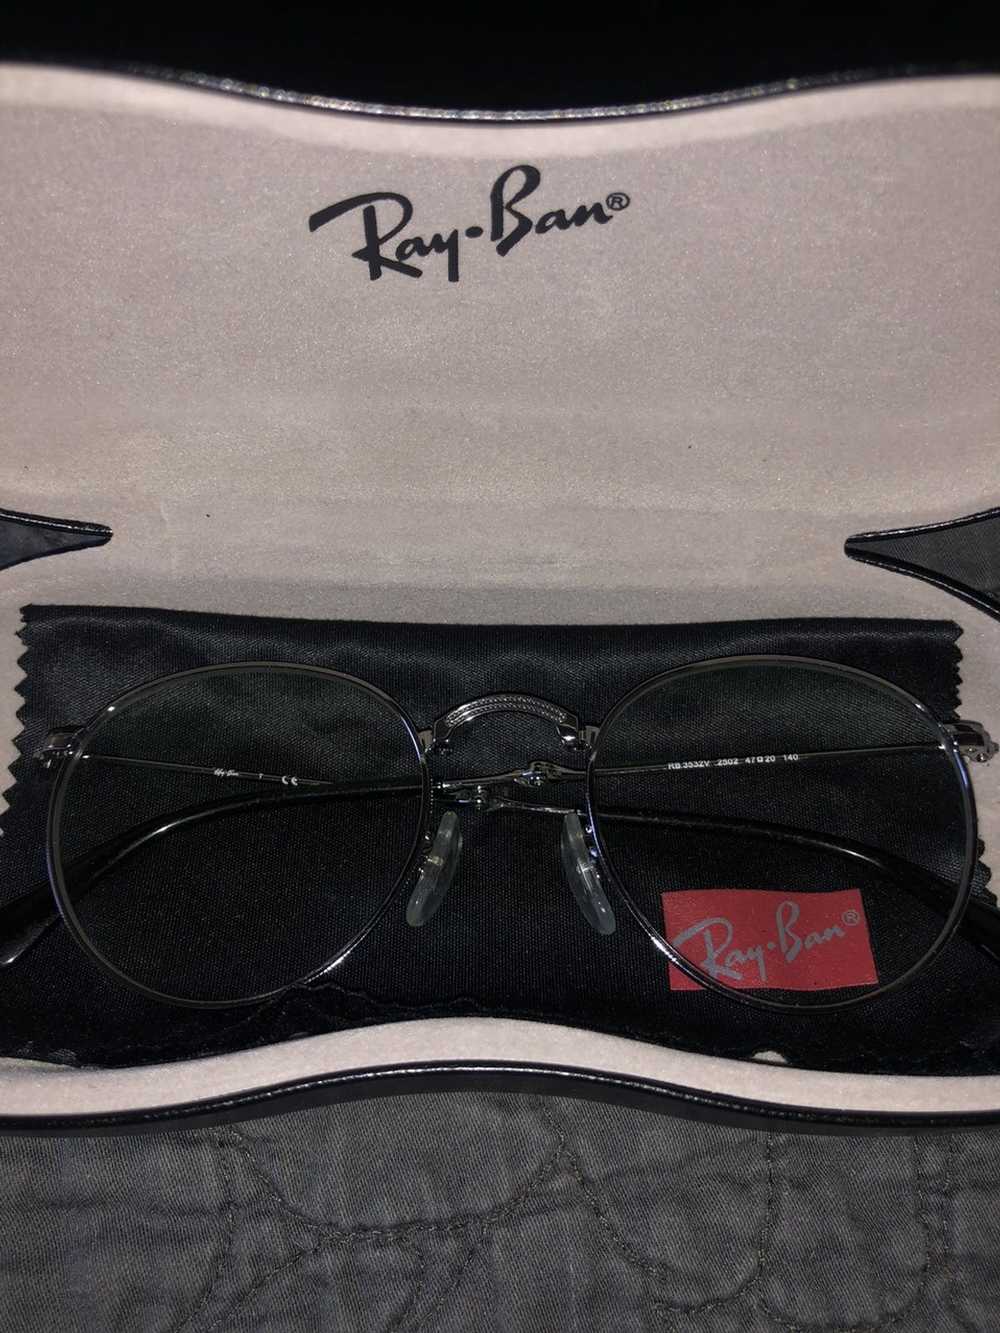 RayBan Ray Ban Folding Eyeglasses RX-3532-V - 2501 - image 4